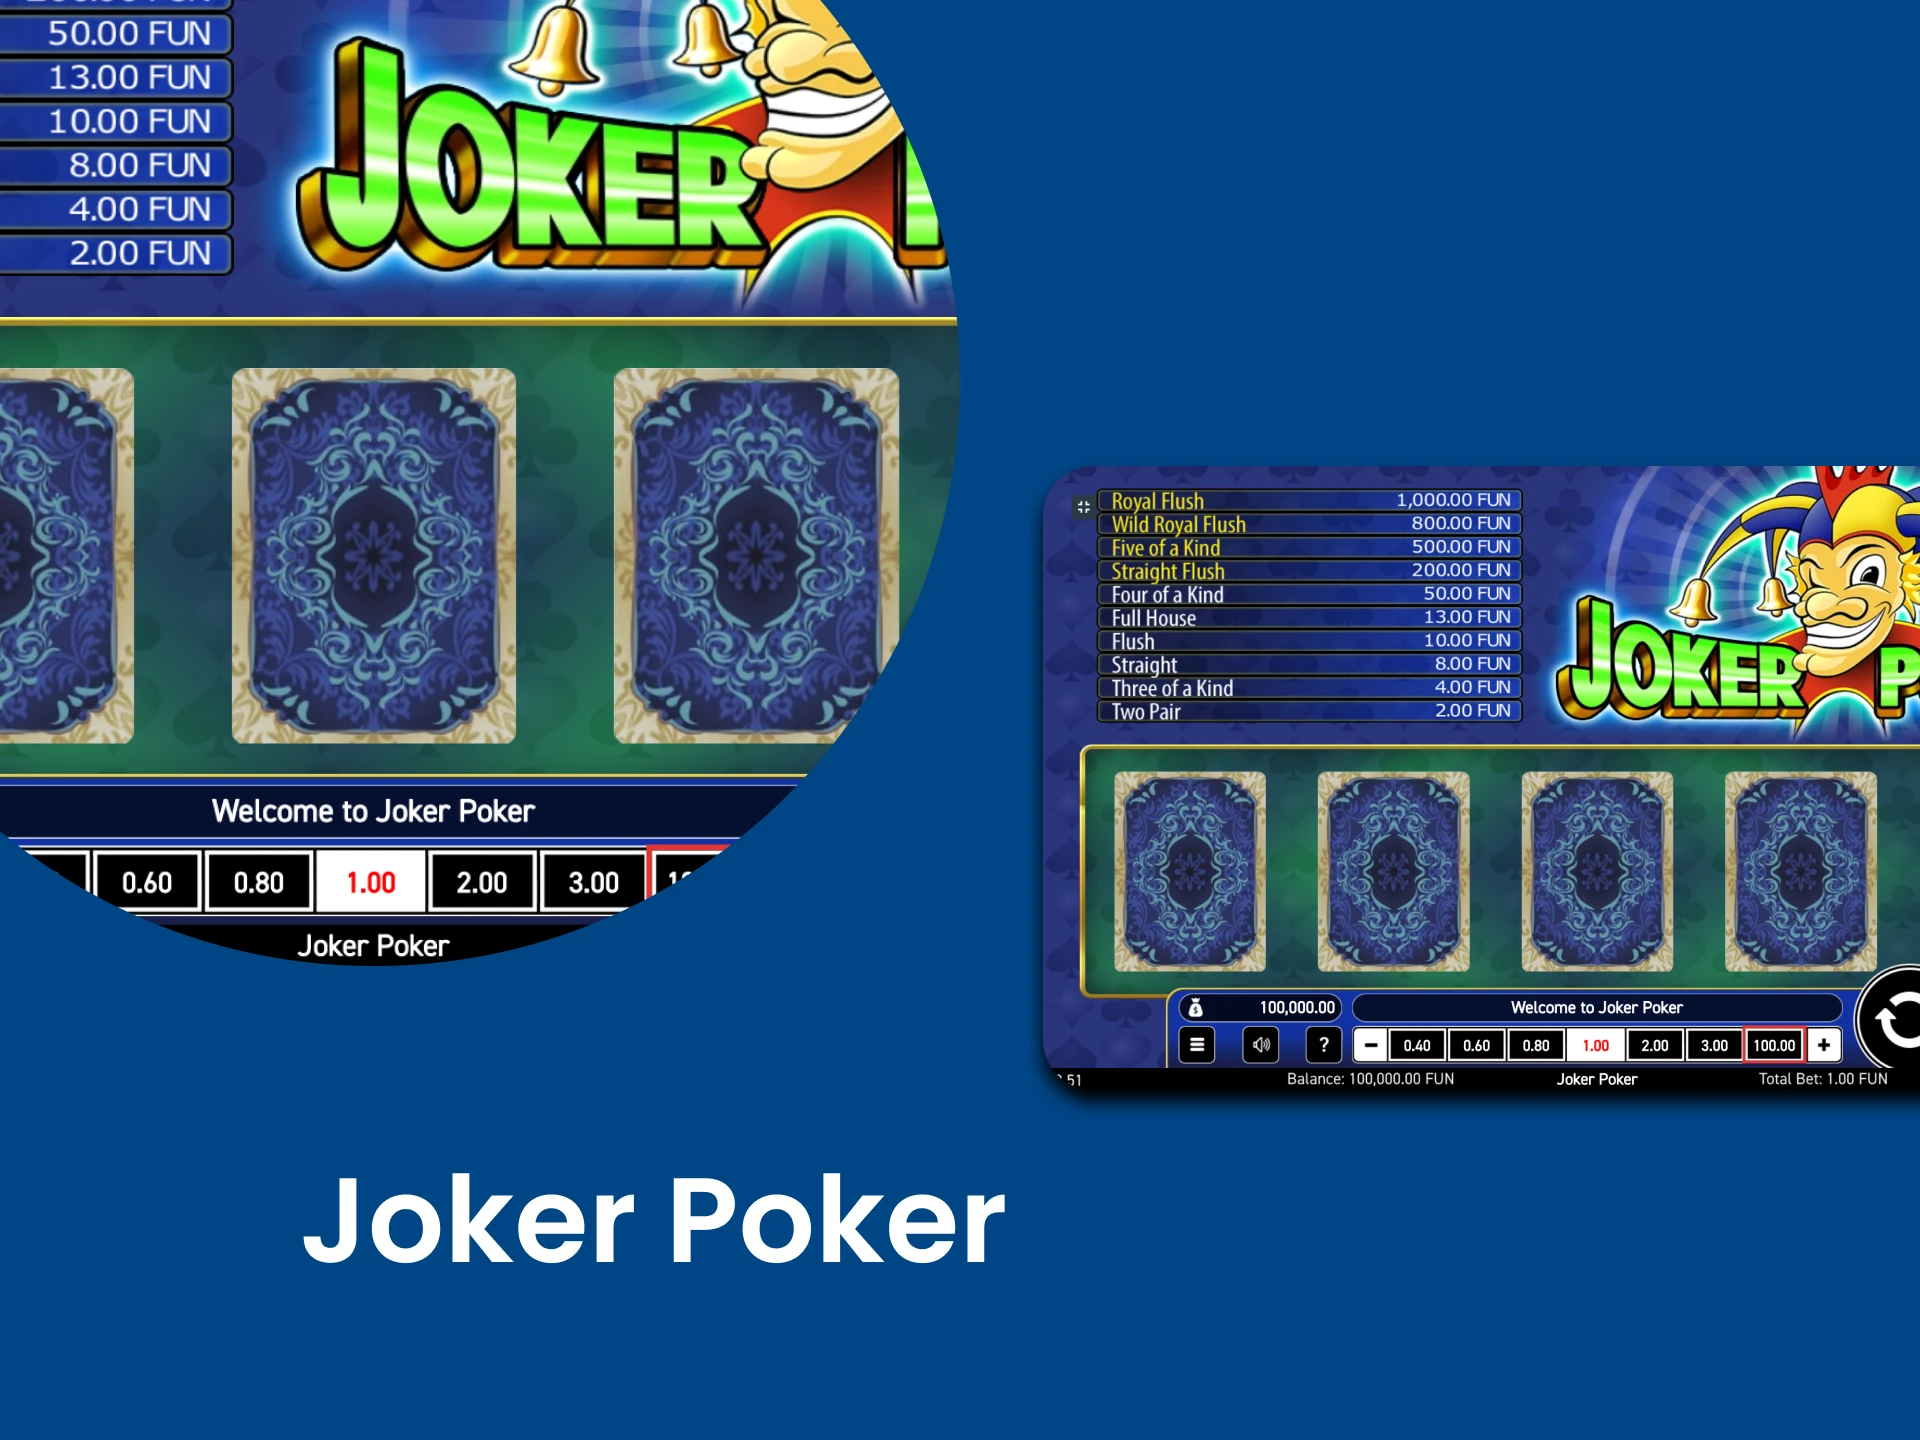 To play Video Poker, choose a game like Joker.